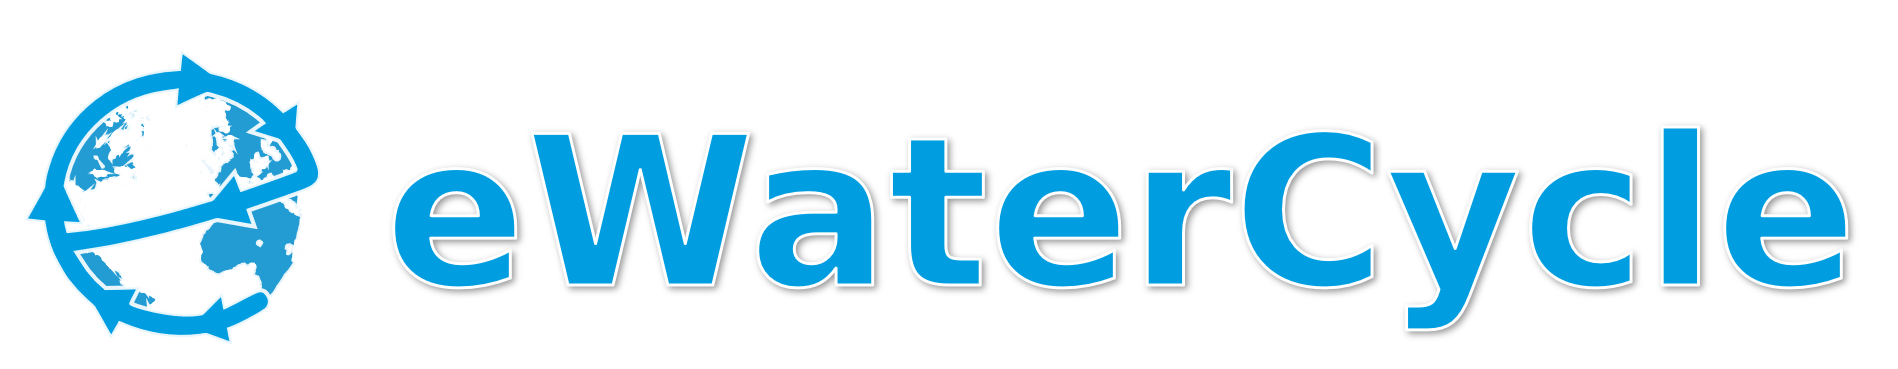 Logo of ewatercycle-marrmot